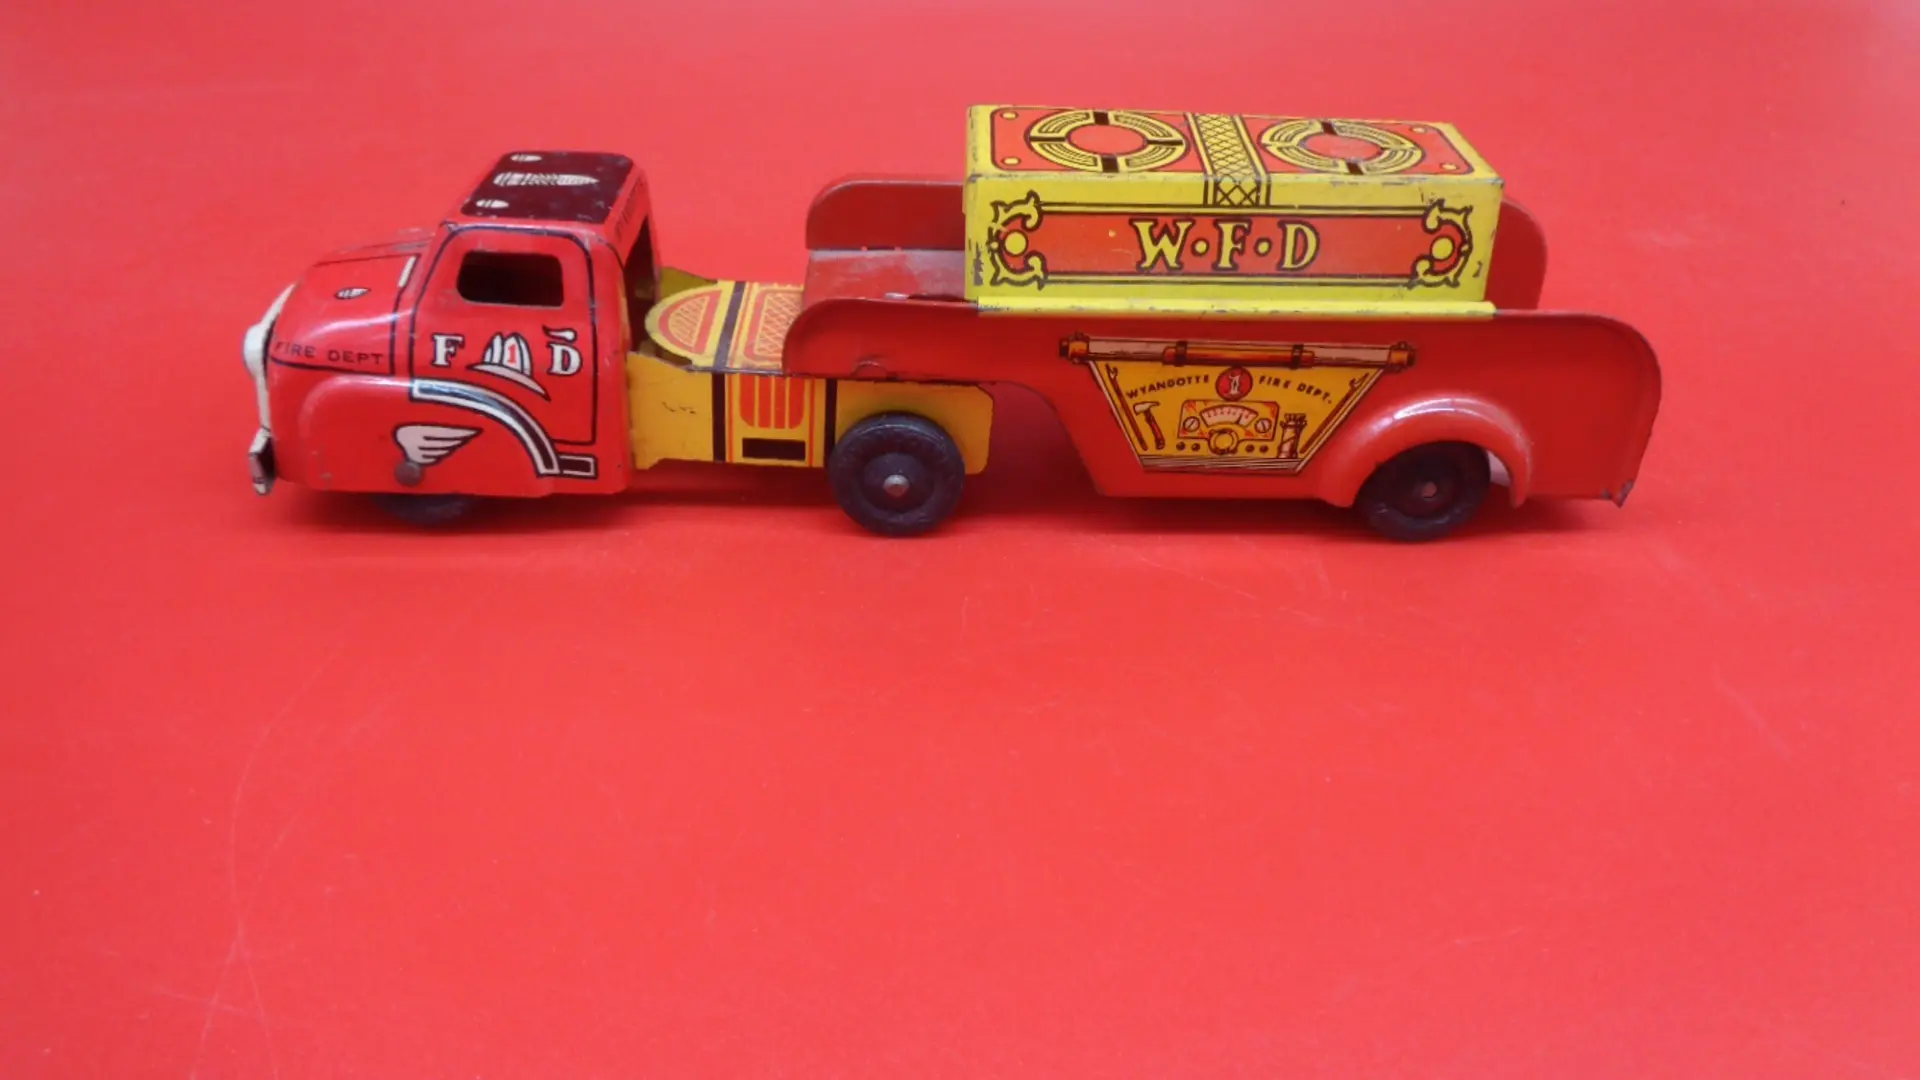 Vintage W.F.D. Fire Department vehicle